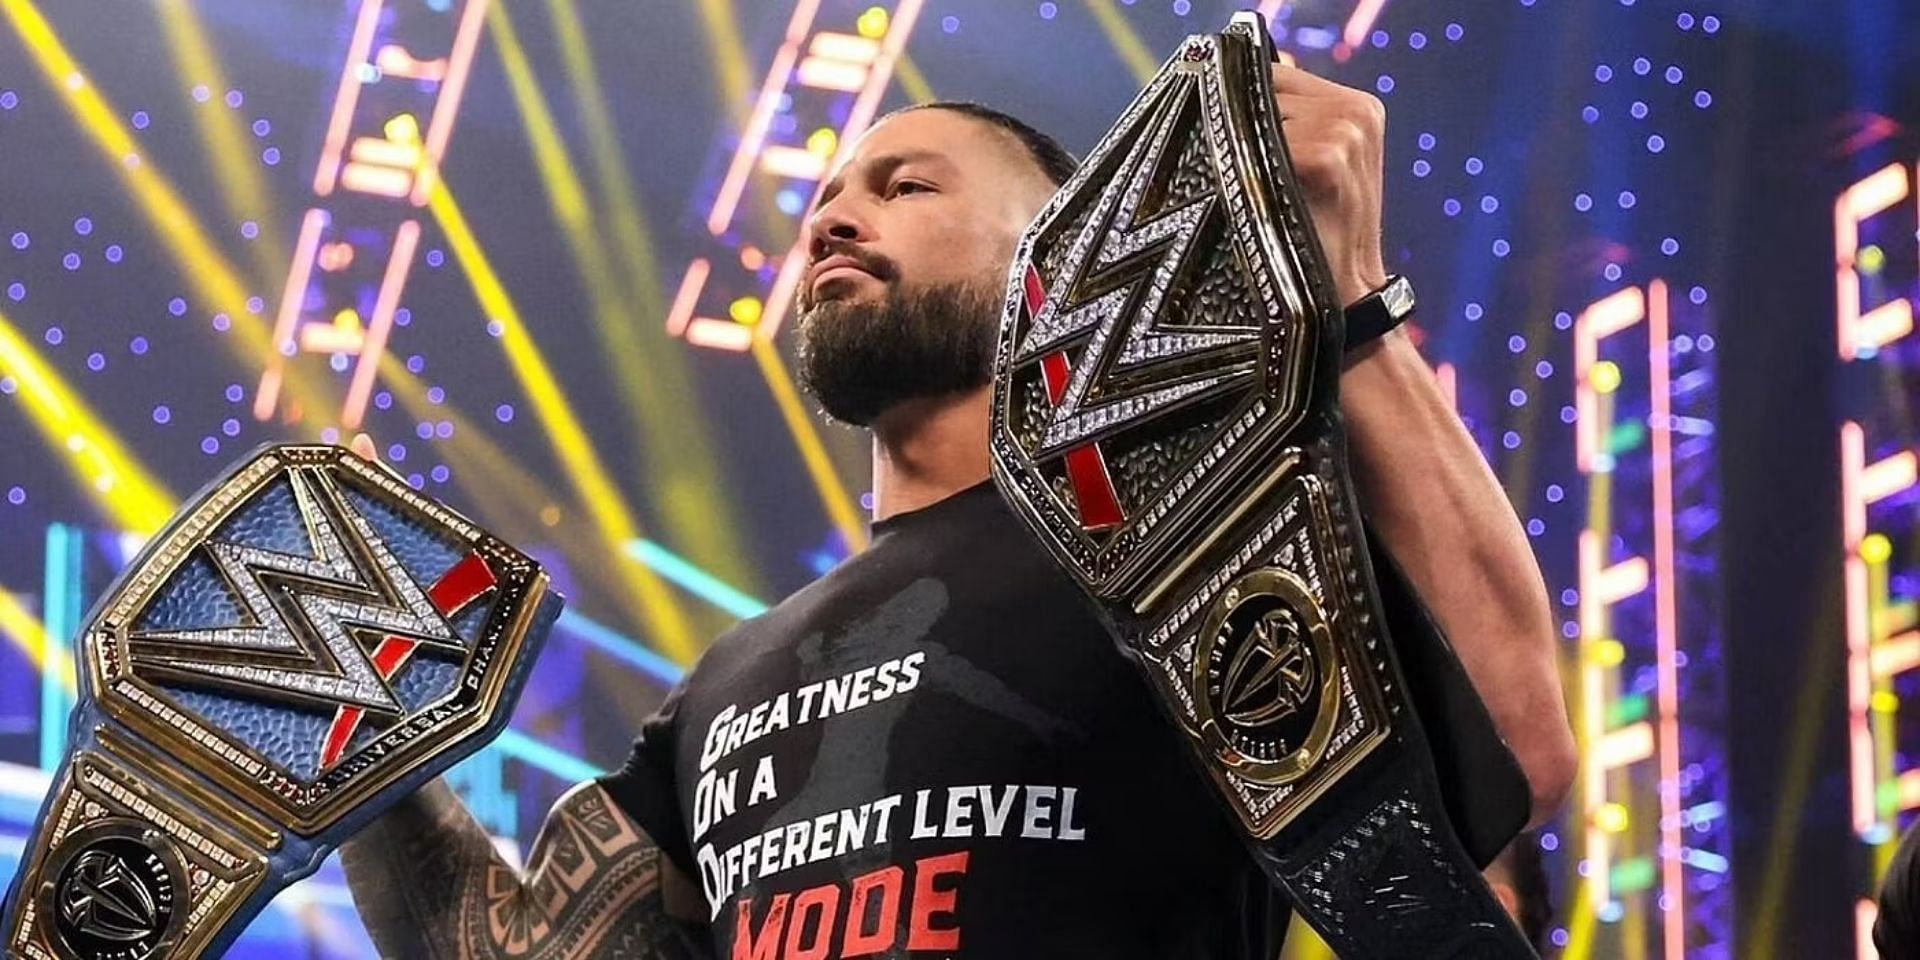 Roman Reigns' WWE Championships will not one belt